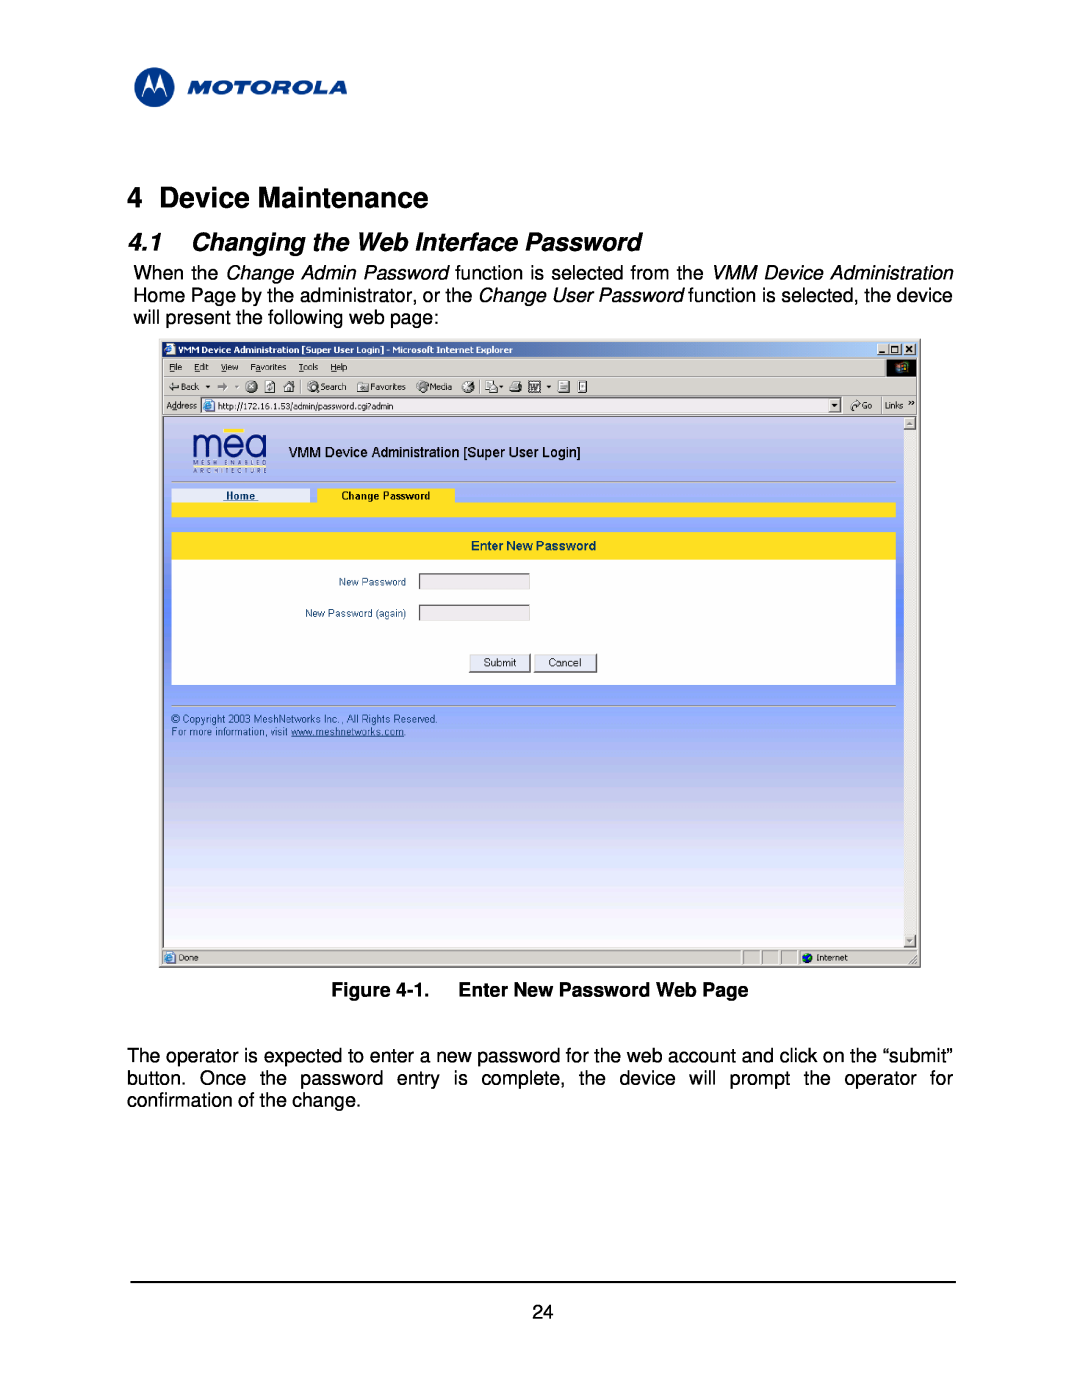 Motorola 3.1 manual Device Maintenance, Changing the Web Interface Password, 1. Enter New Password Web Page 